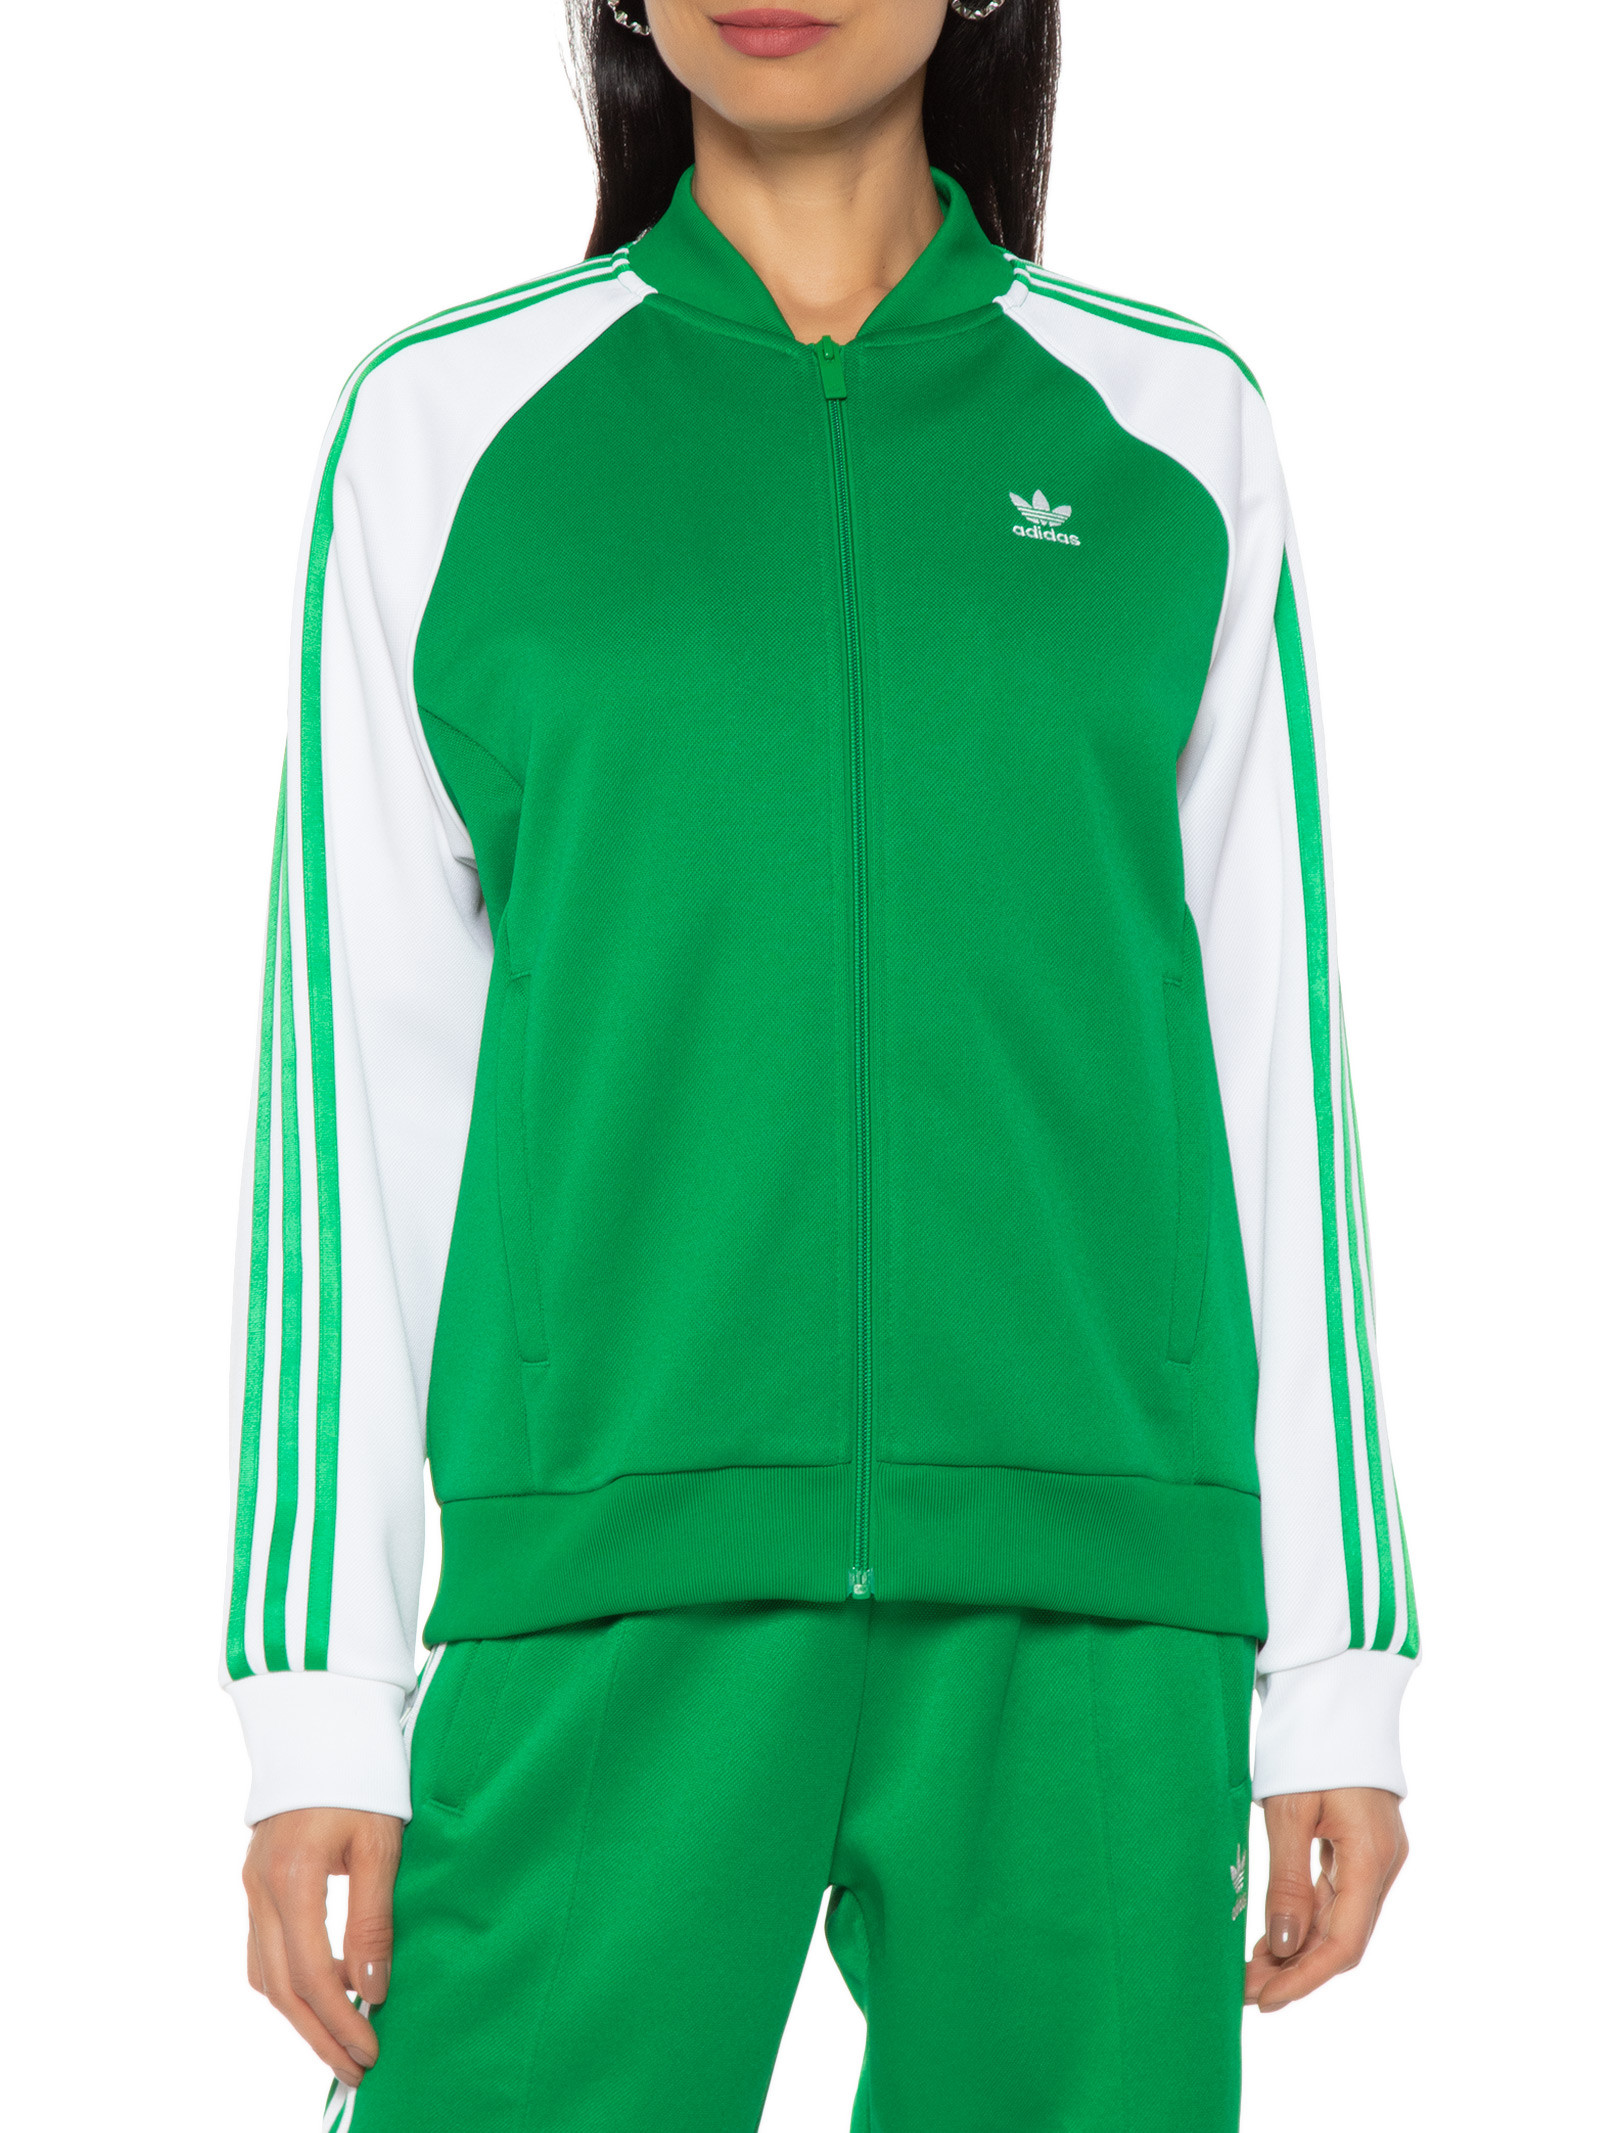 Jaqueta Feminina Sst - Adidas Originals - Verde - Oqvestir